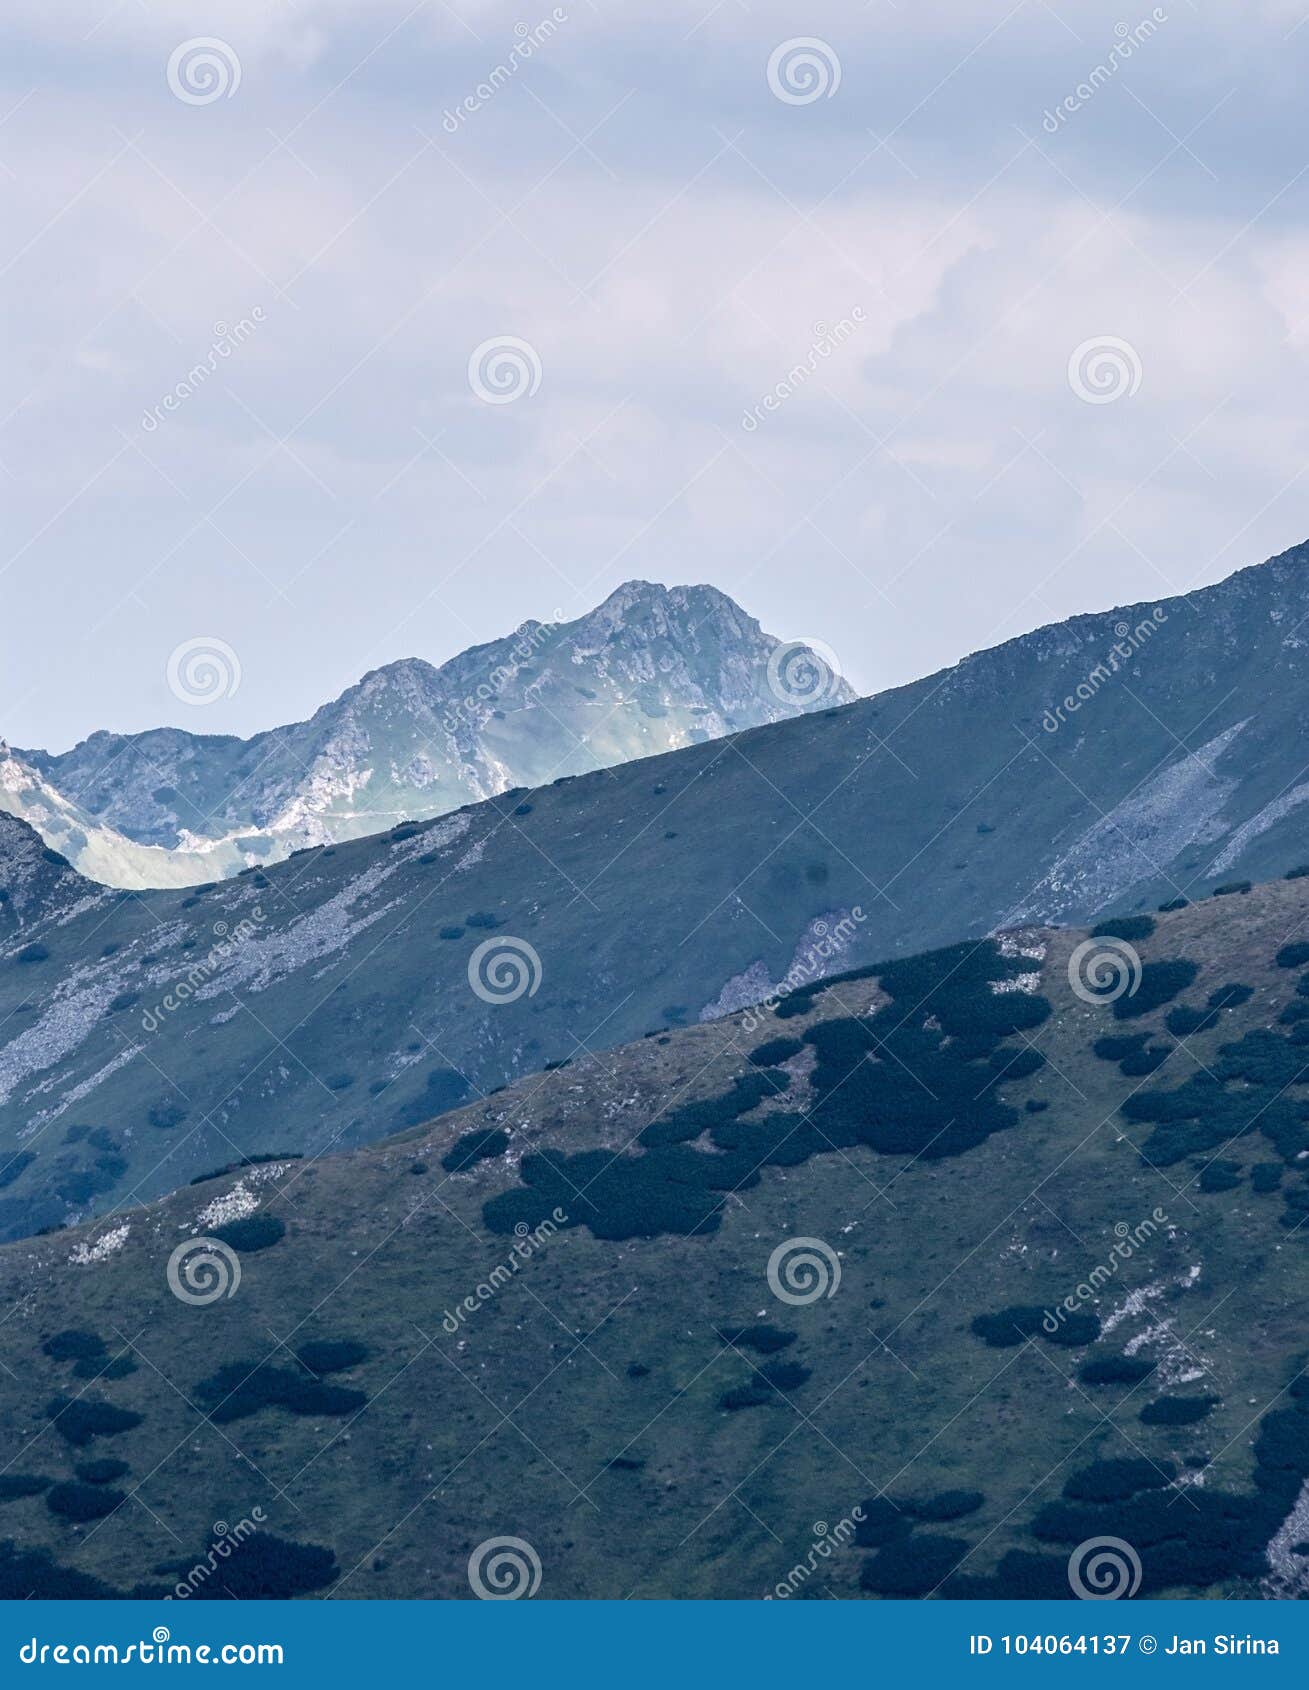 swinica mountain peak from bystre sedlo pass in tatra mountains